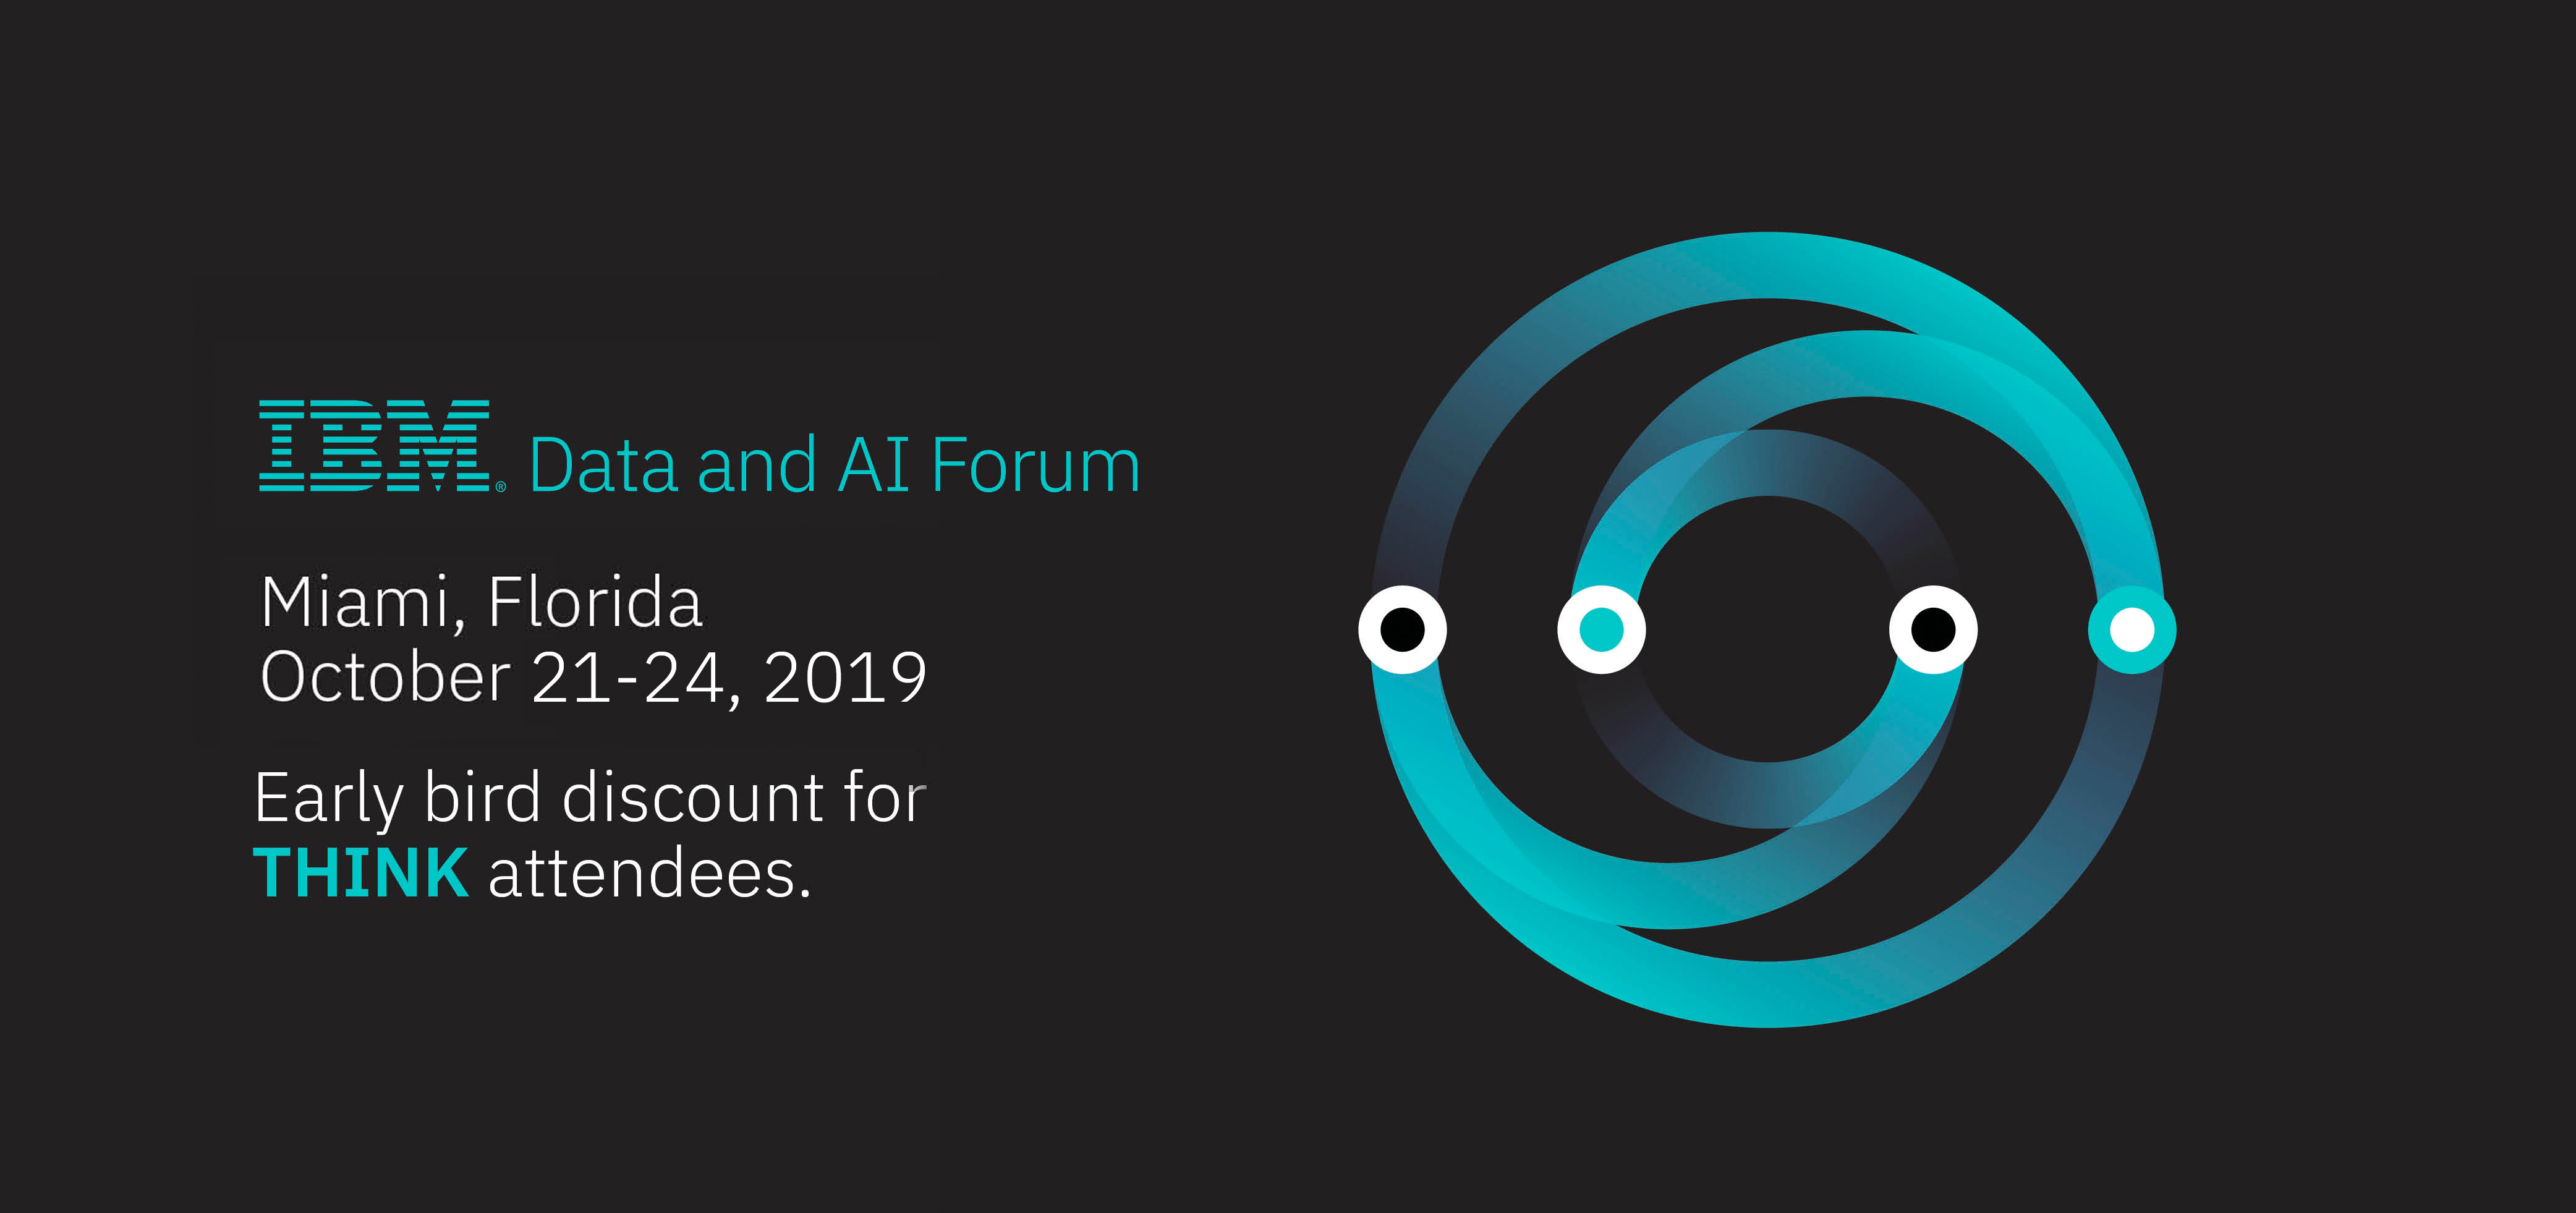 IBM Data and AI Forum. October 21-24, 2019. InterContinental Miami, Miami Florida.